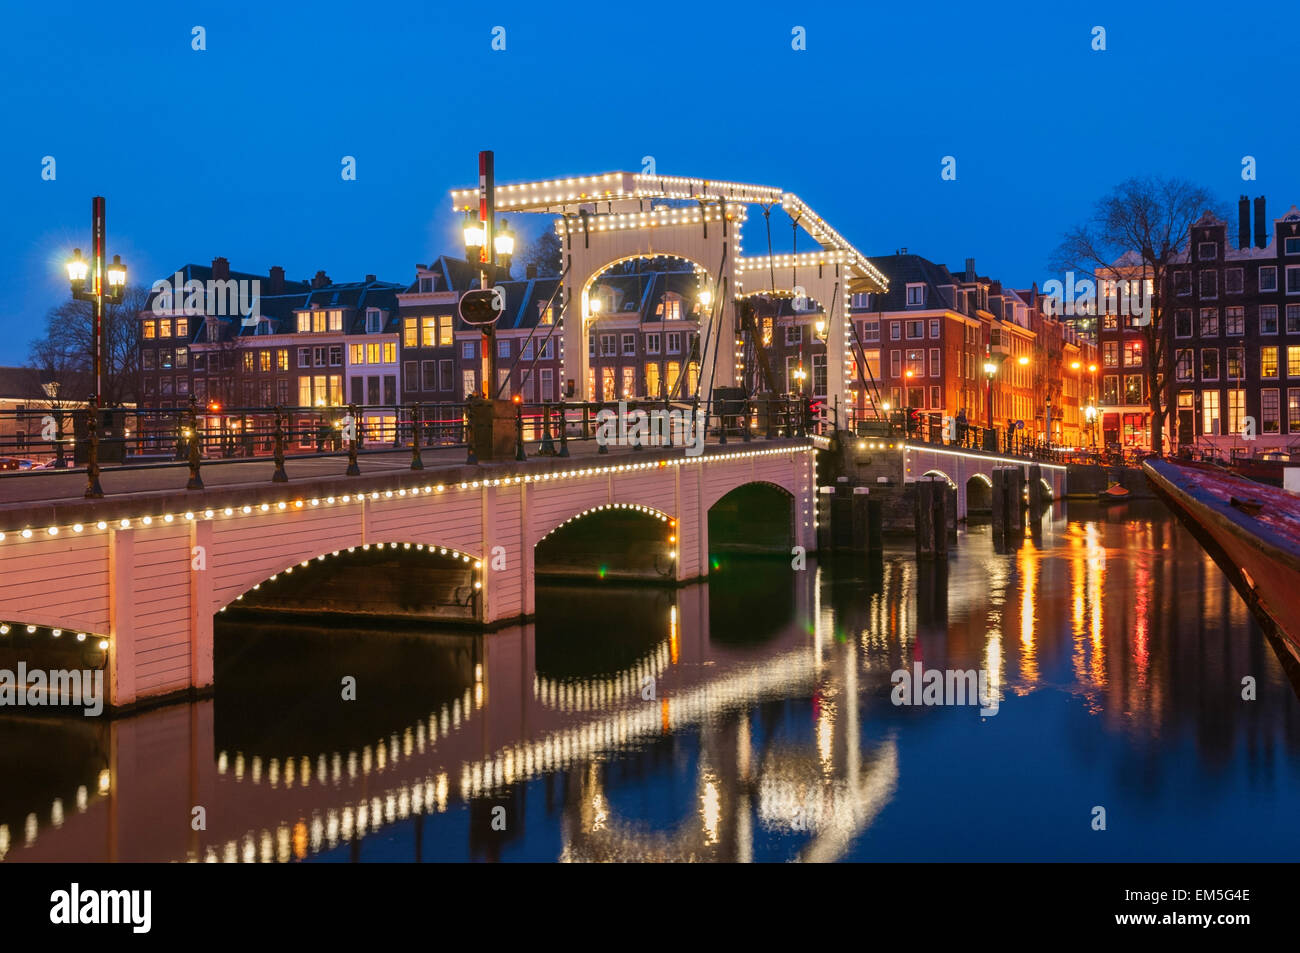 Magere Brug or Skinny Bridge Amsterdam Holland Stock Photo